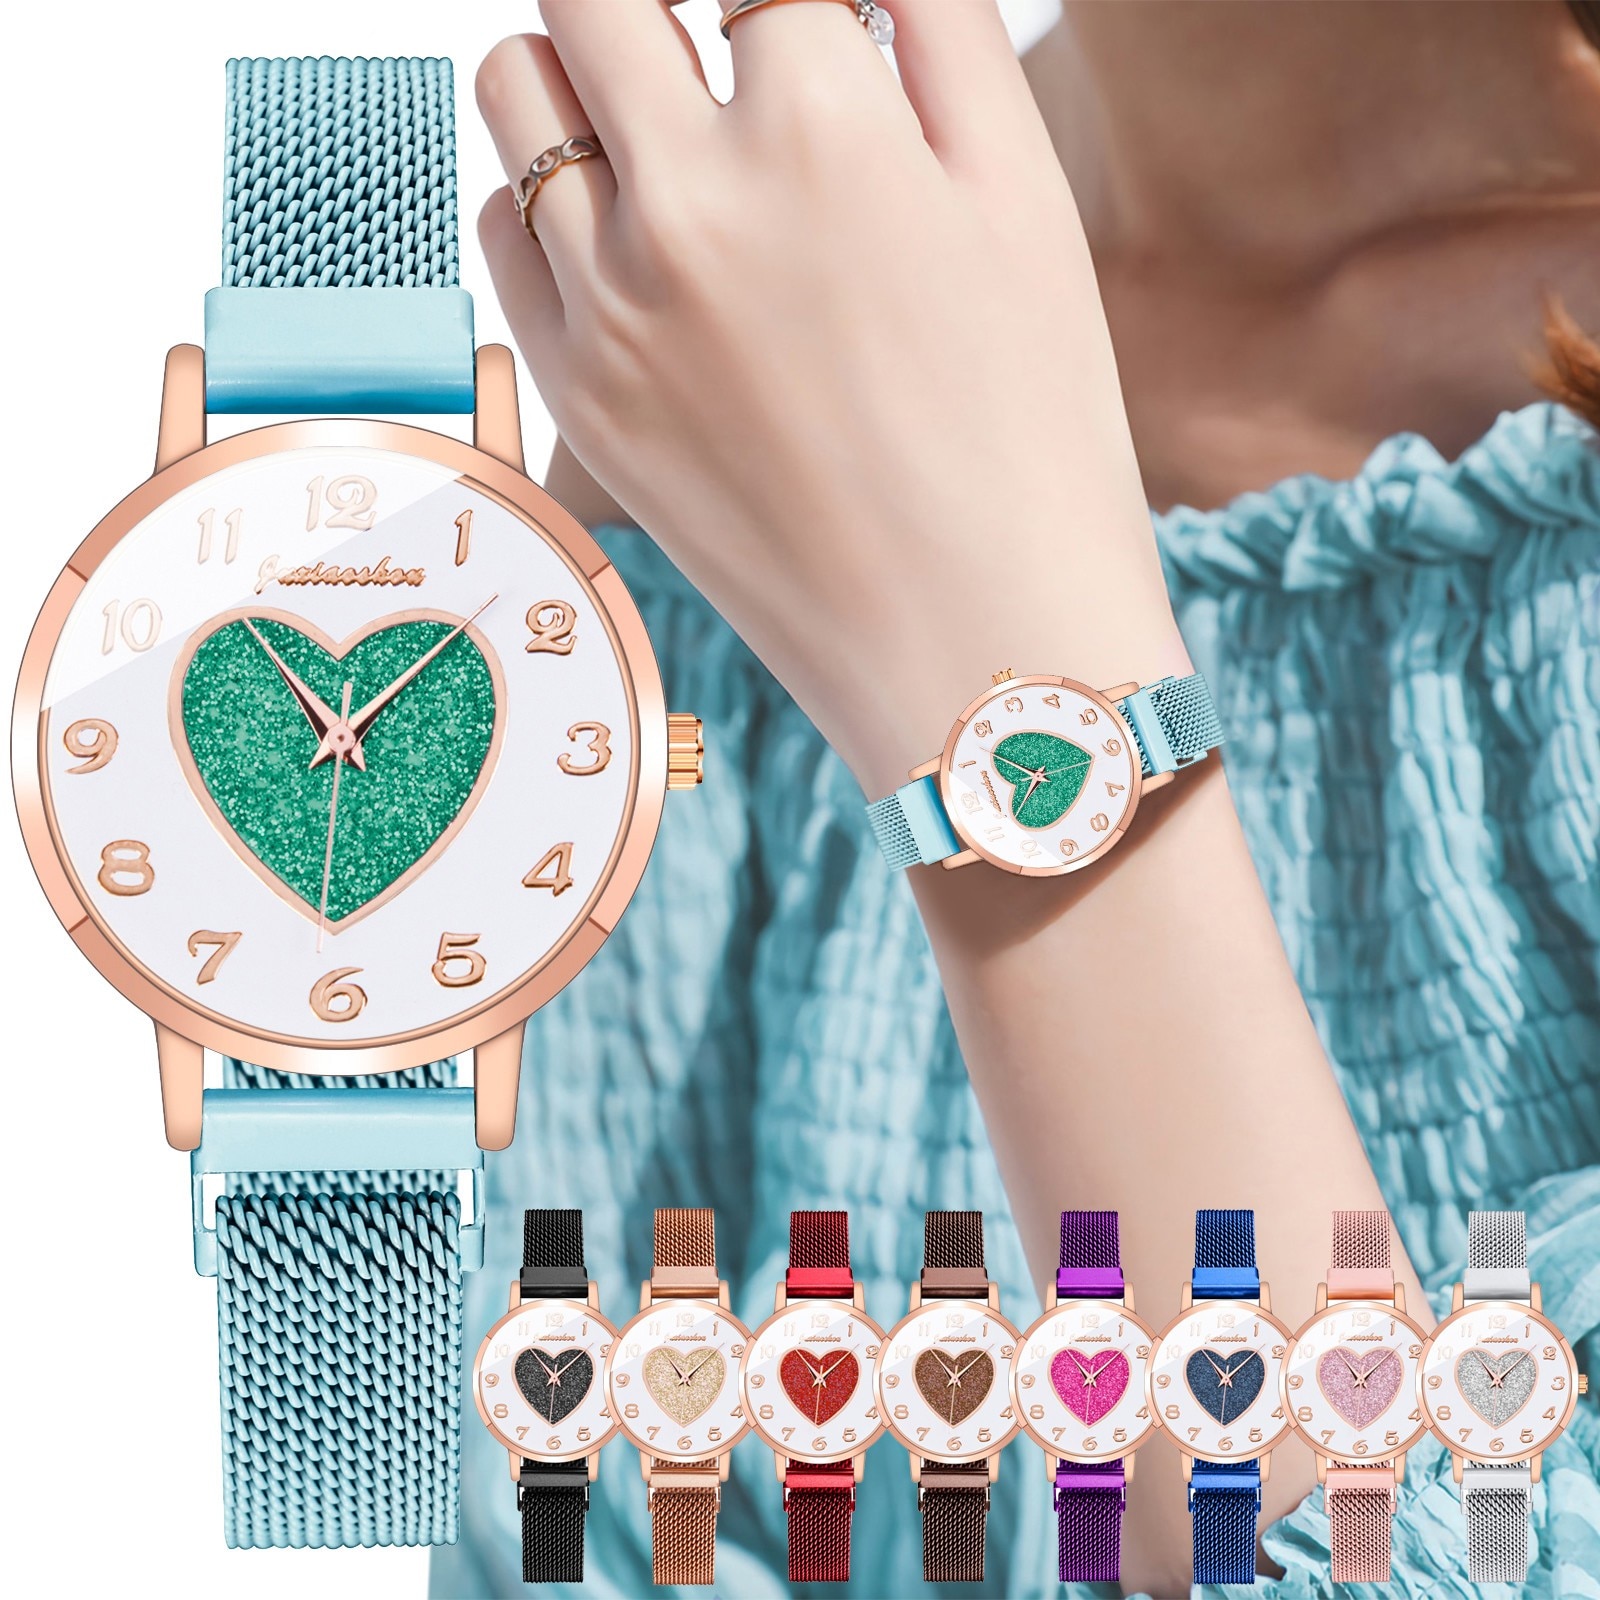 Luxury Top Stylish Women Watch for Valentine's Day Gift Stainless Steel Dial Quartz Watch Casual Analog Watch Bracelet reloj muj